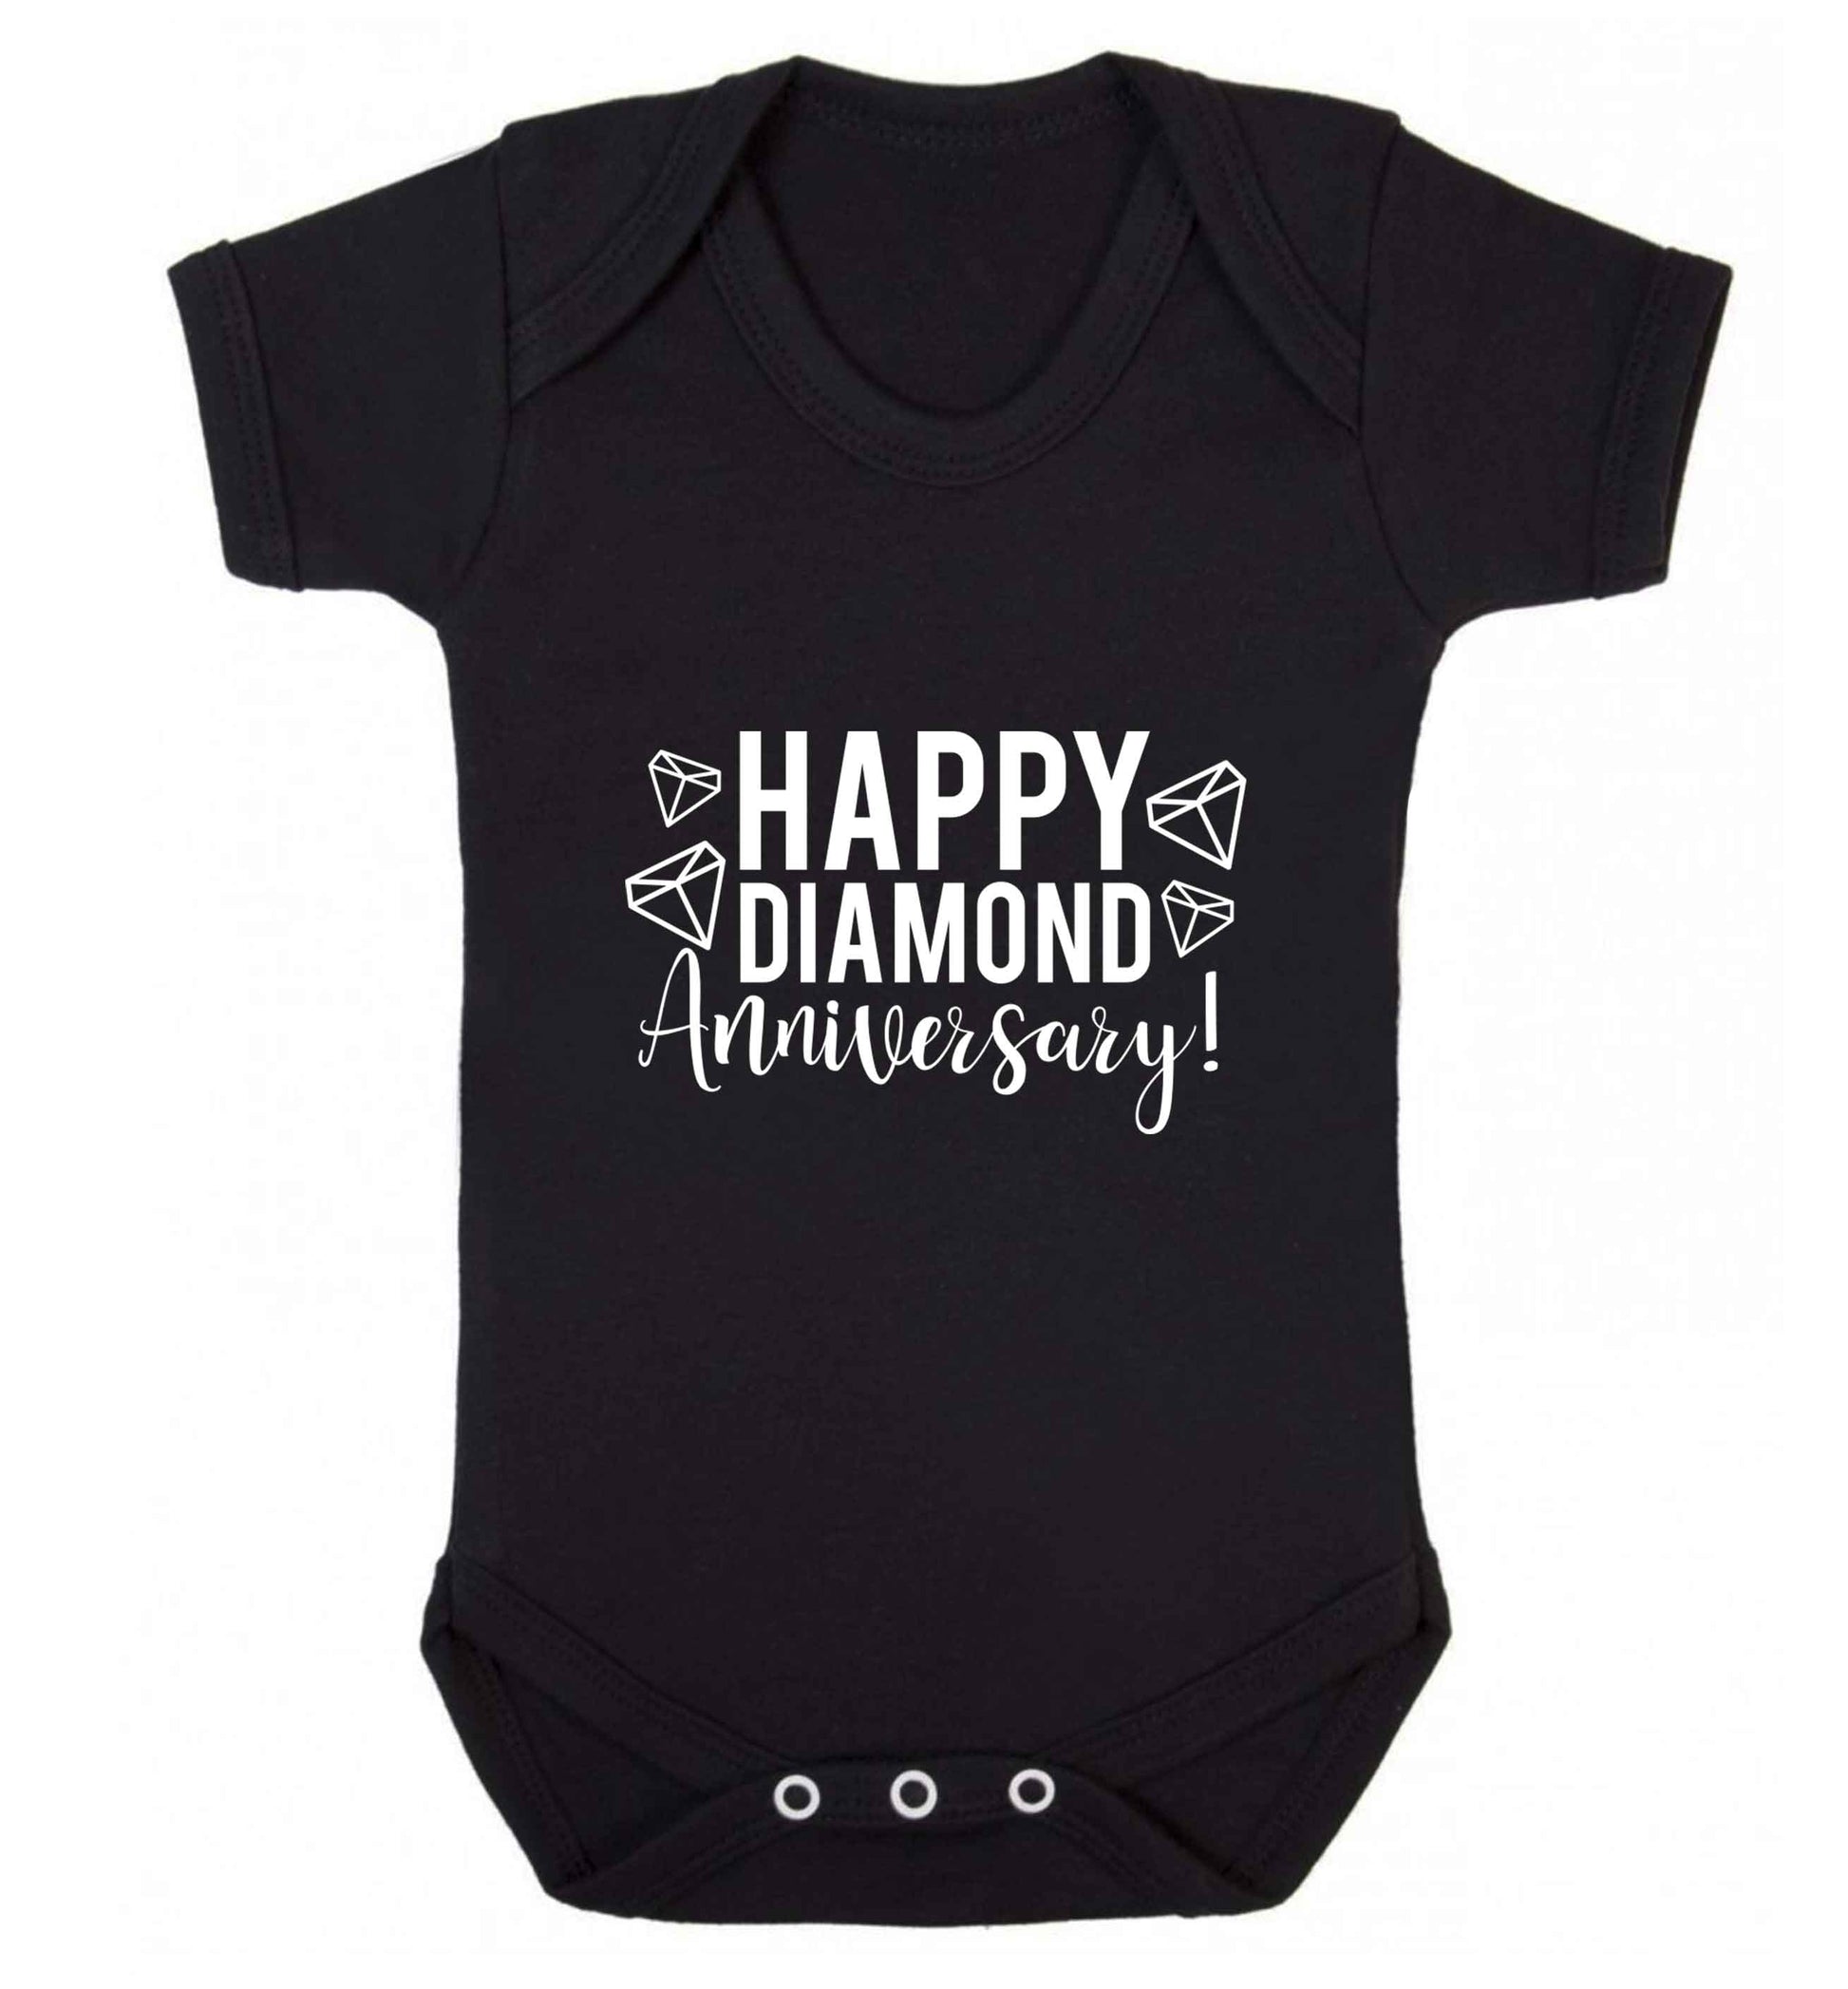 Happy diamond anniversary! baby vest black 18-24 months